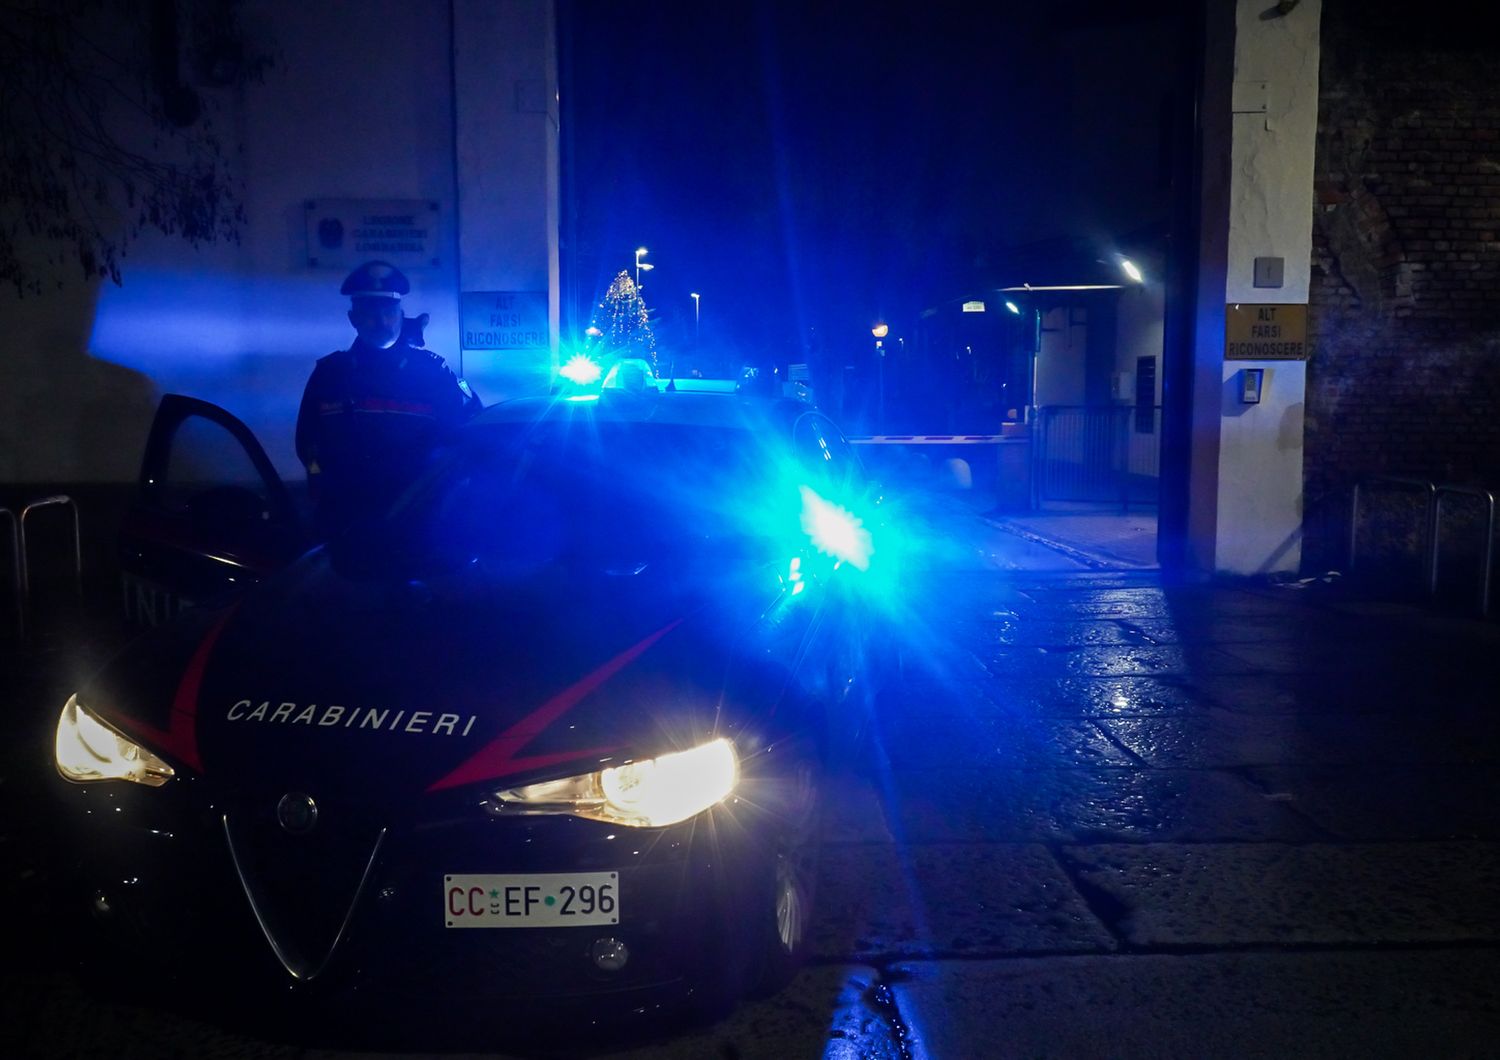 Carabinieri a Milano